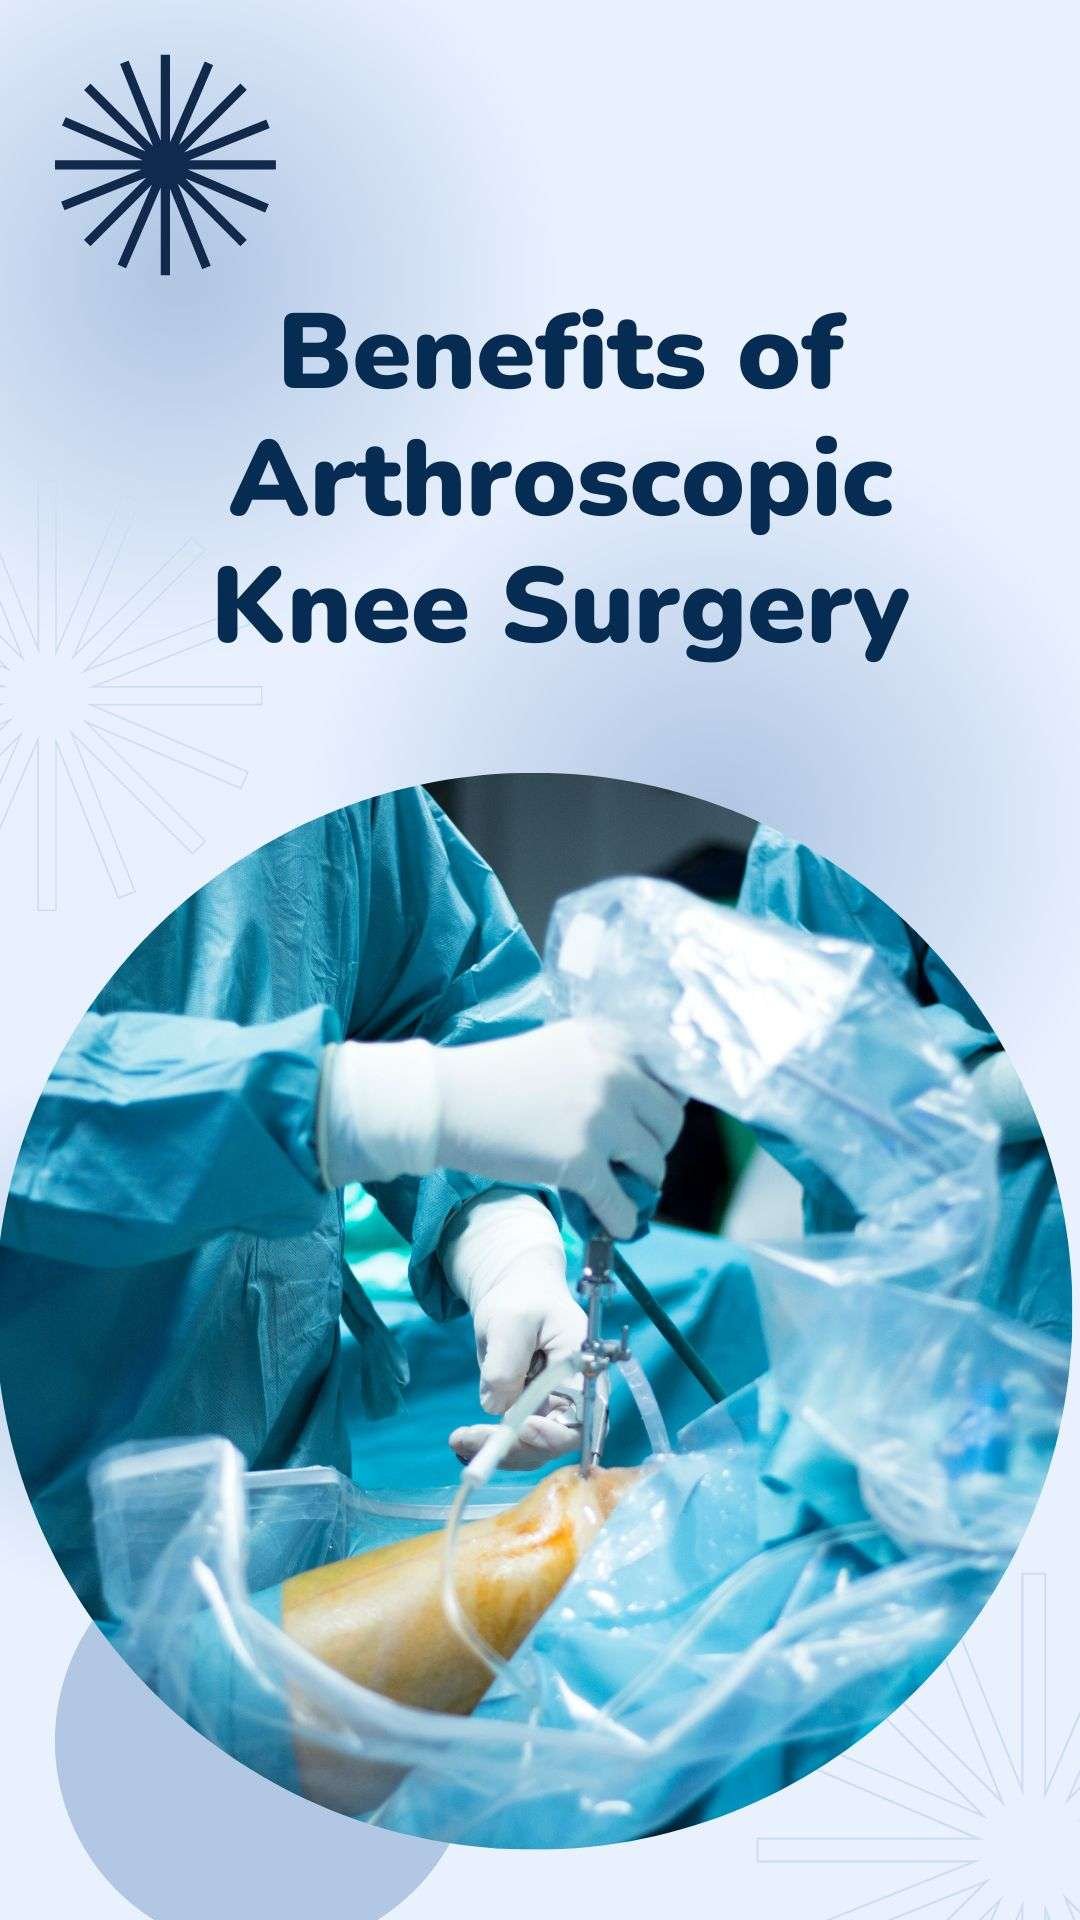 Benefits of Arthroscopic Knee Surgery